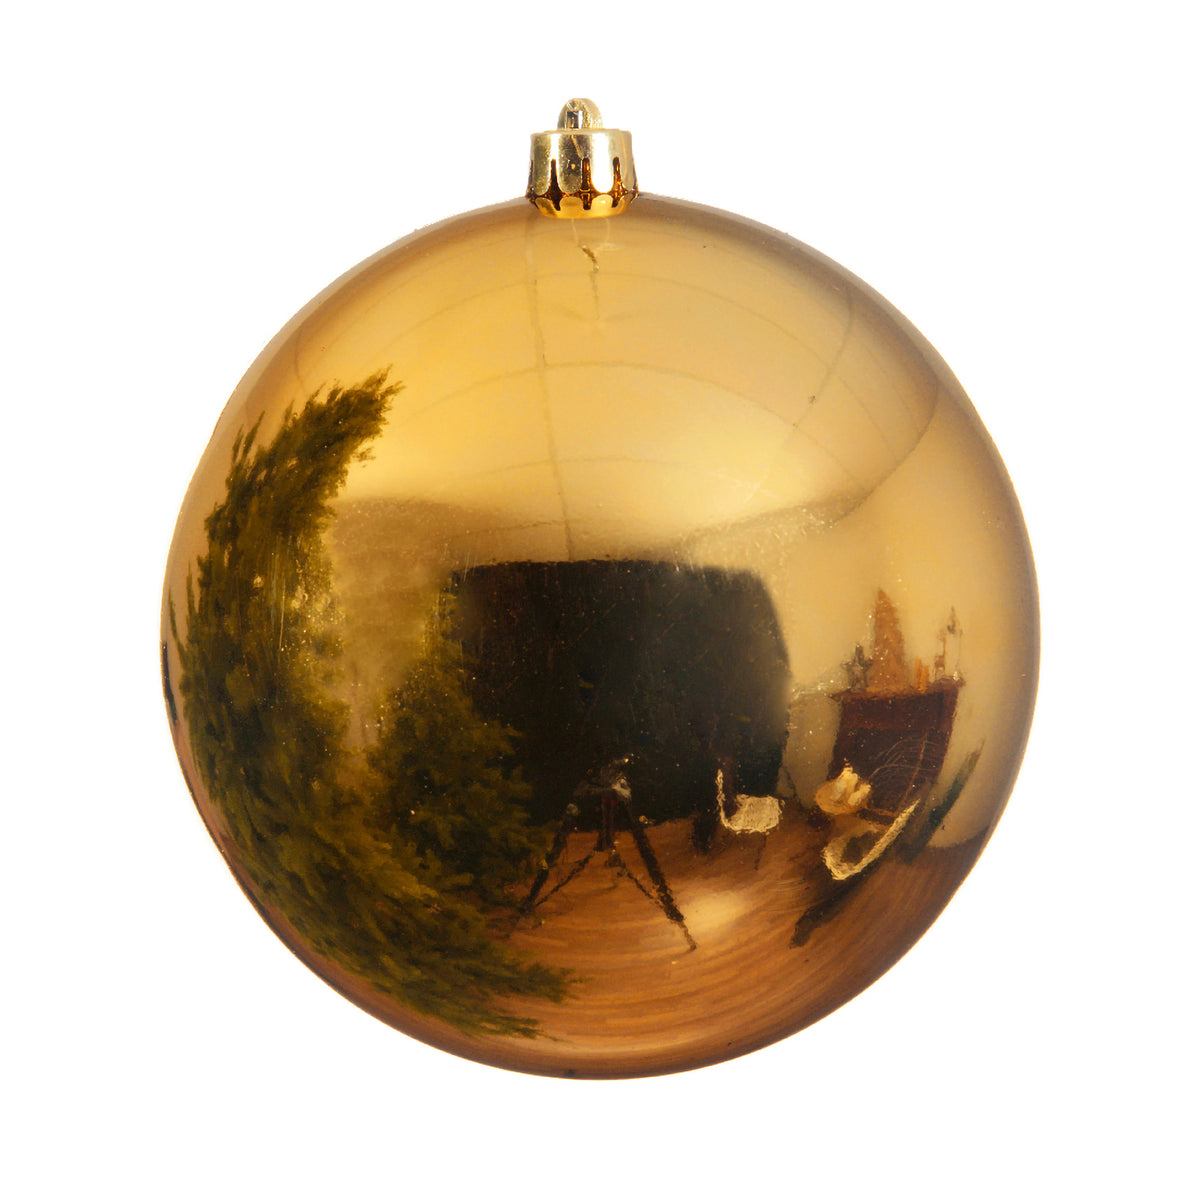 14cm Shiny Gold Shatterproof Christmas Tree Bauble